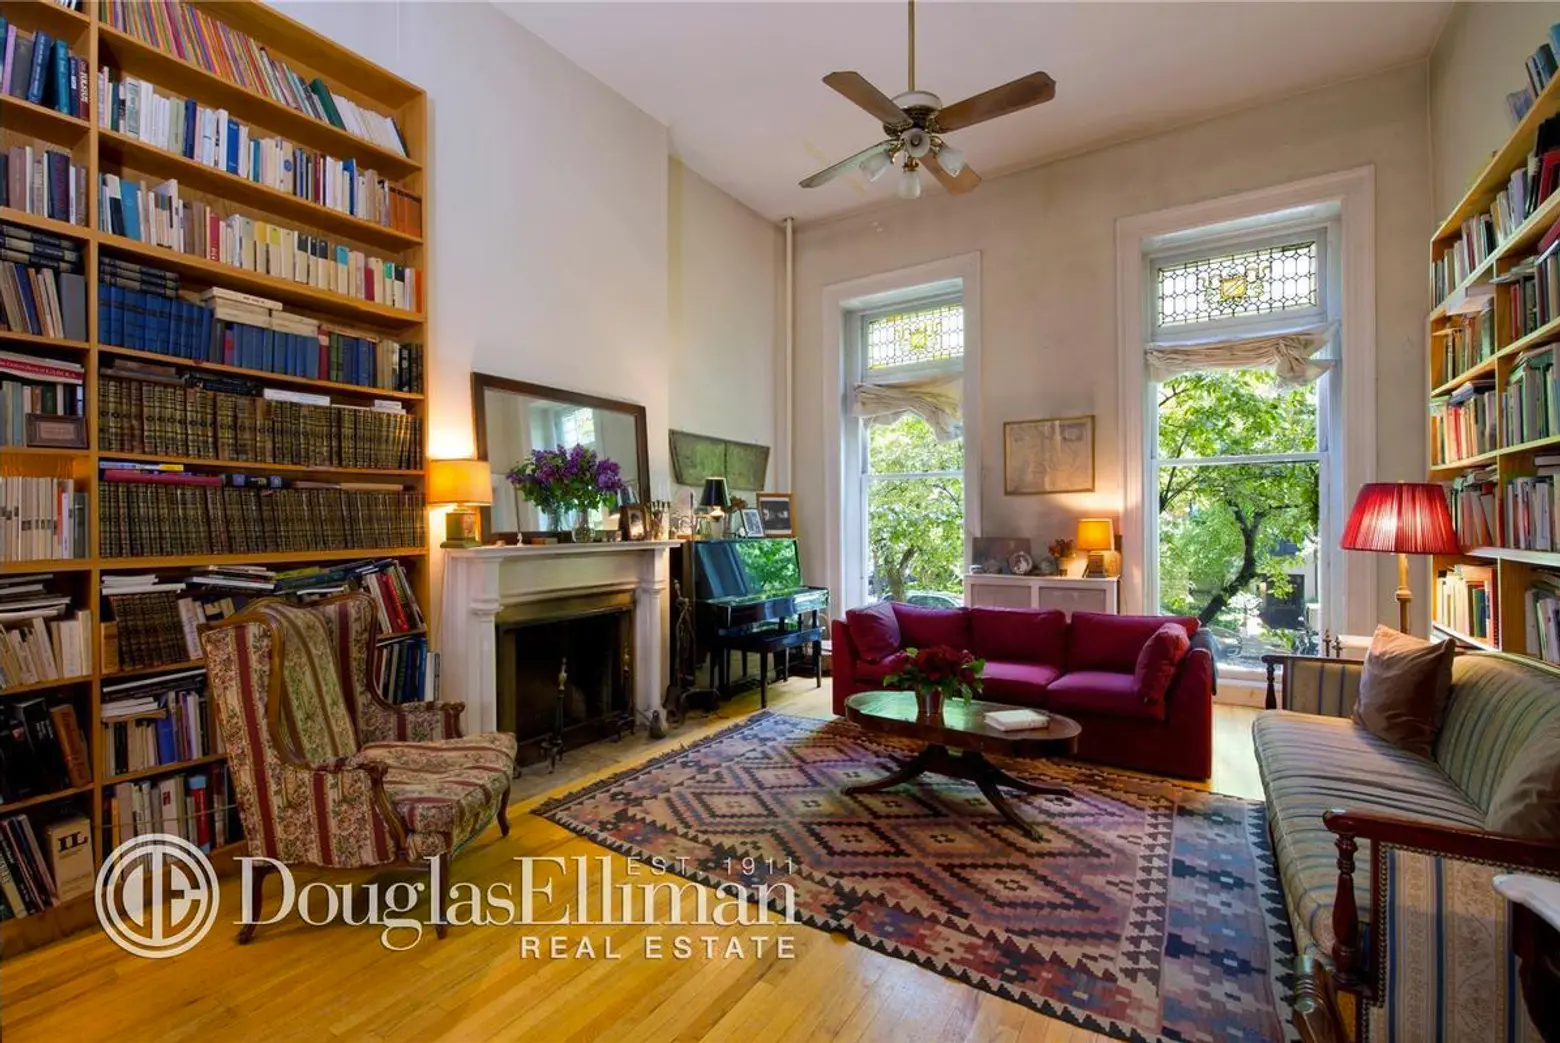 Oscar-Winning Director Errol Morris Buys a Poetic Brooklyn Heights Home for $1.9M